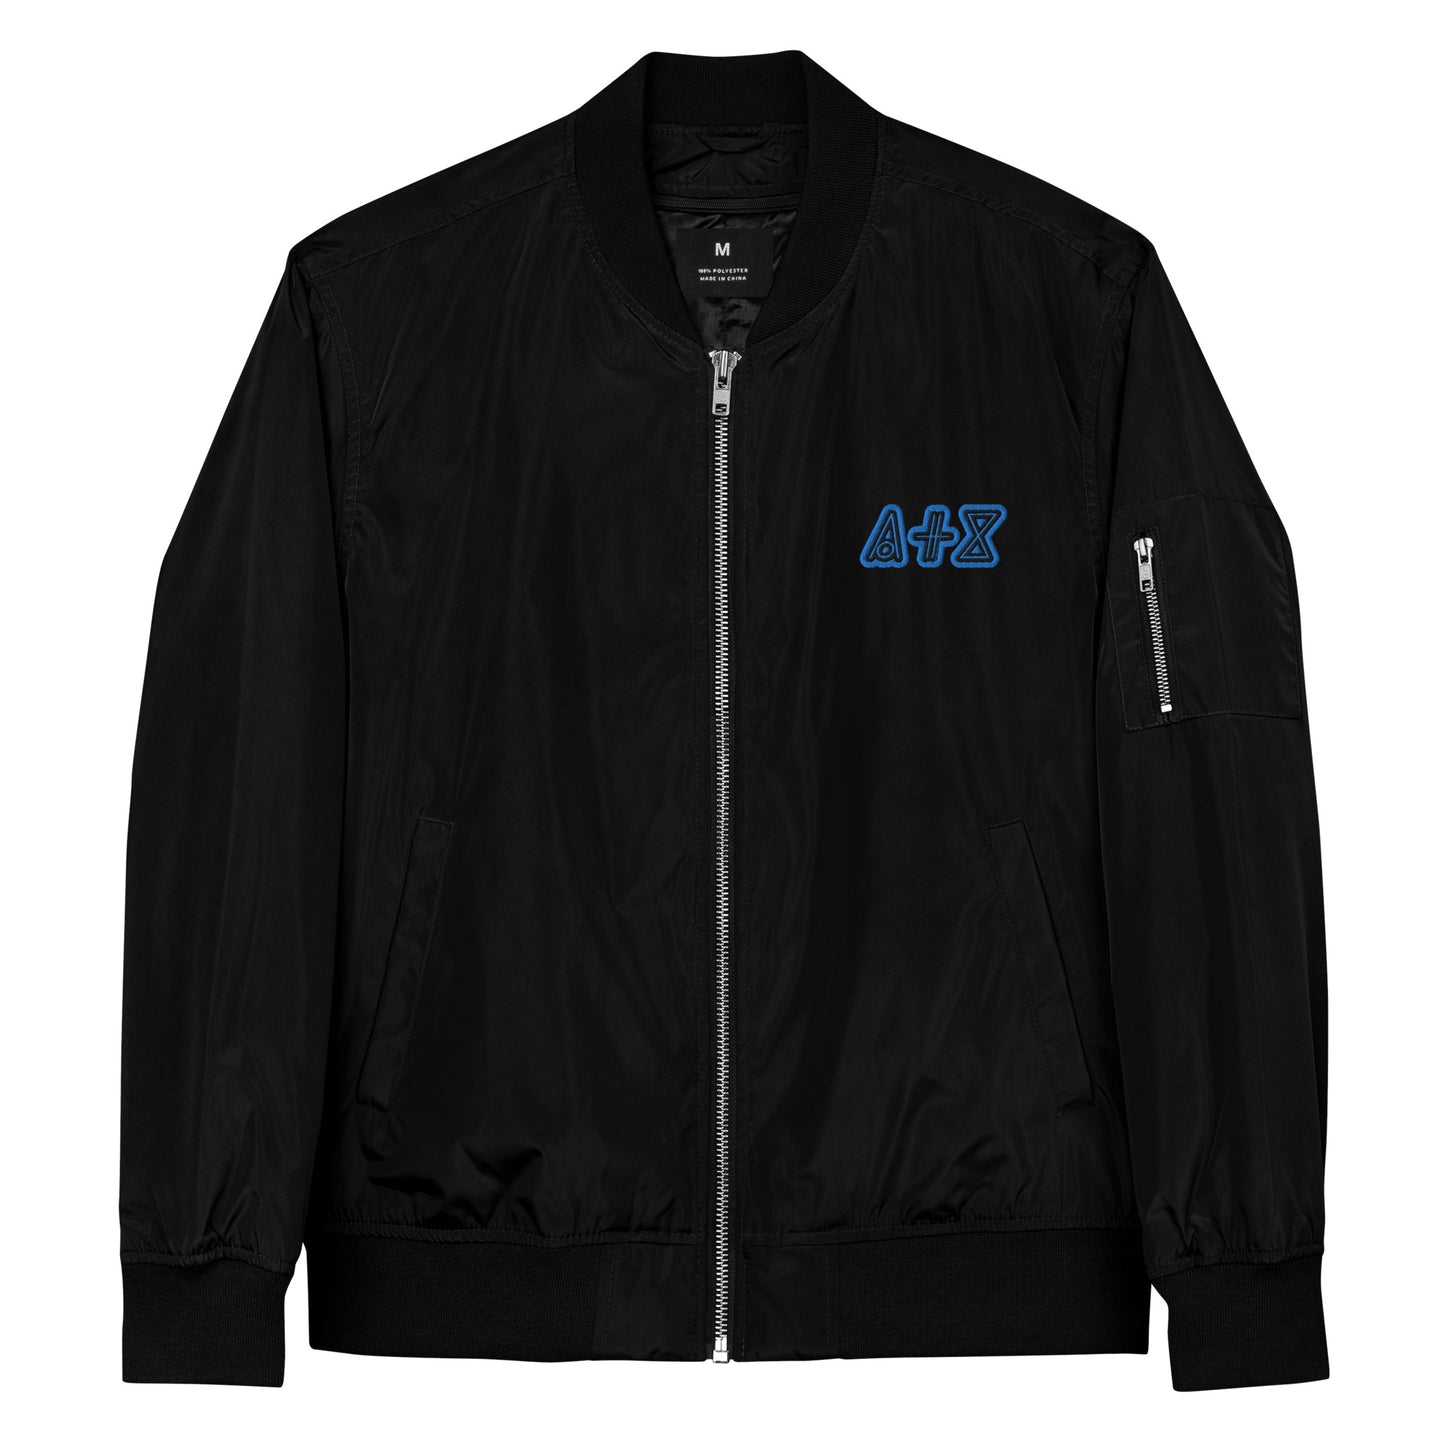 ATZ "Cold" Premium recycled bomber jacket